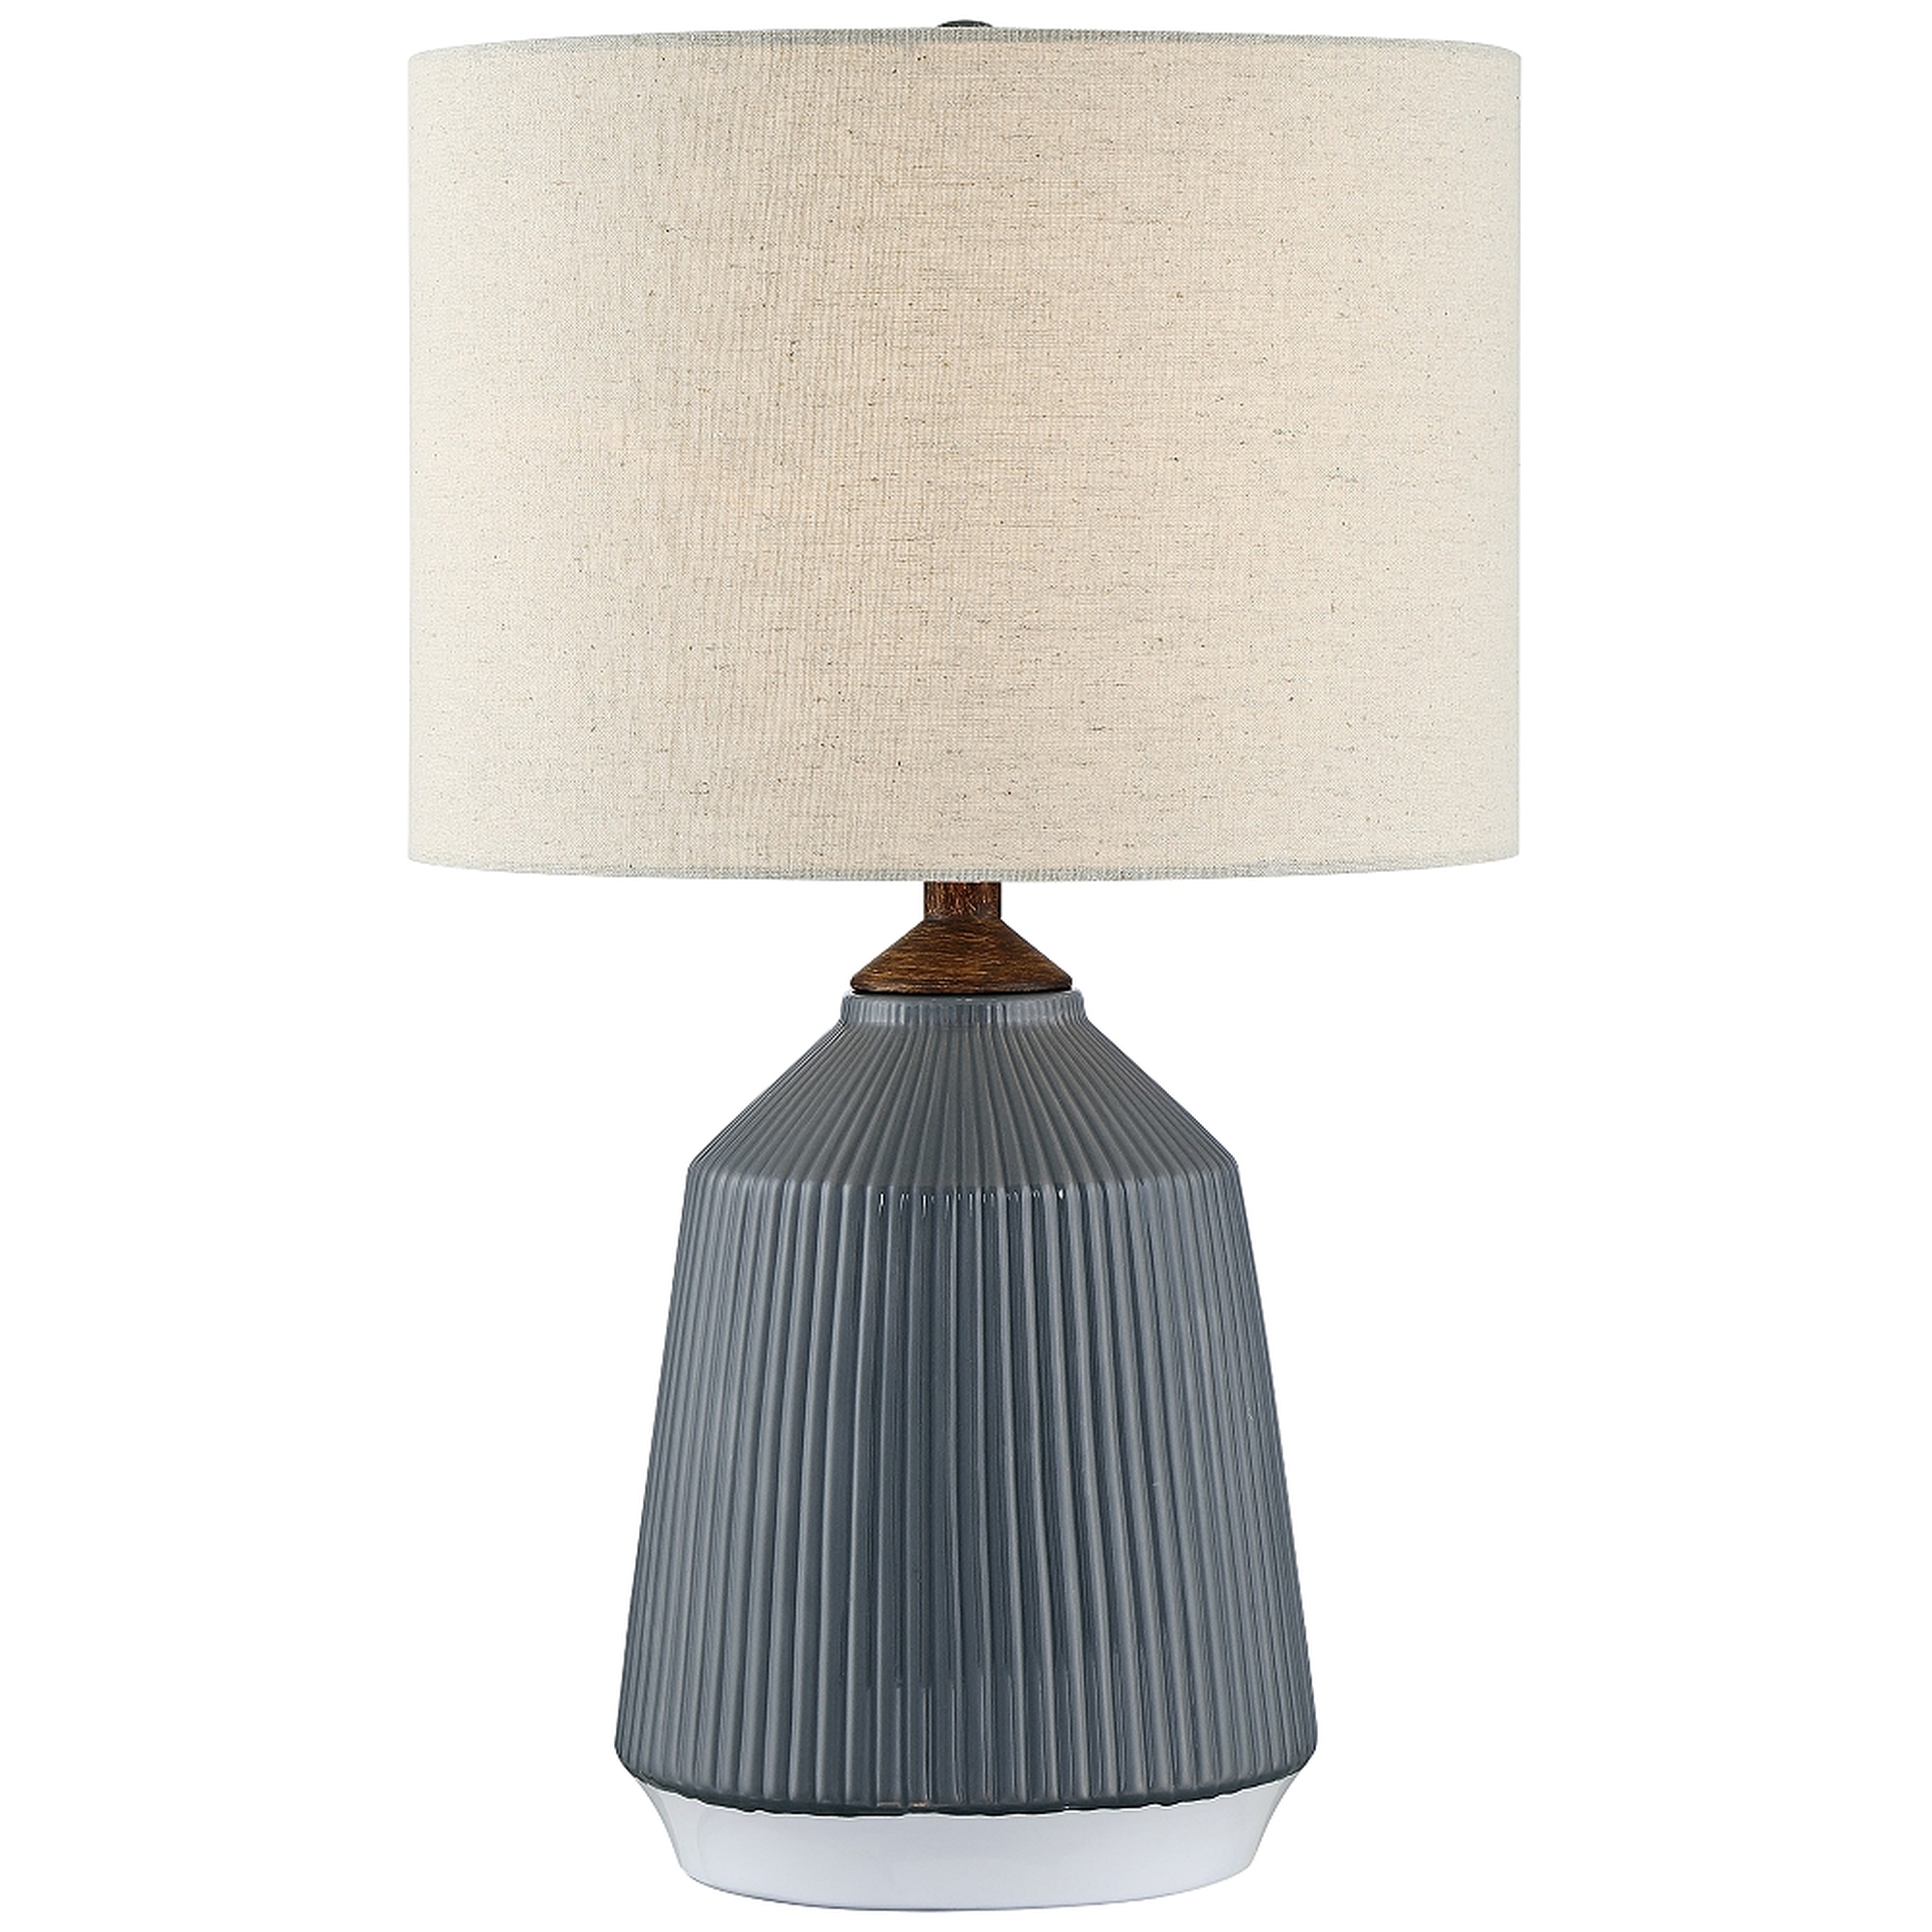 Lite Source Saratoga Gray Ceramic Striped Accent Table Lamp - Style # 69R51 - Lamps Plus